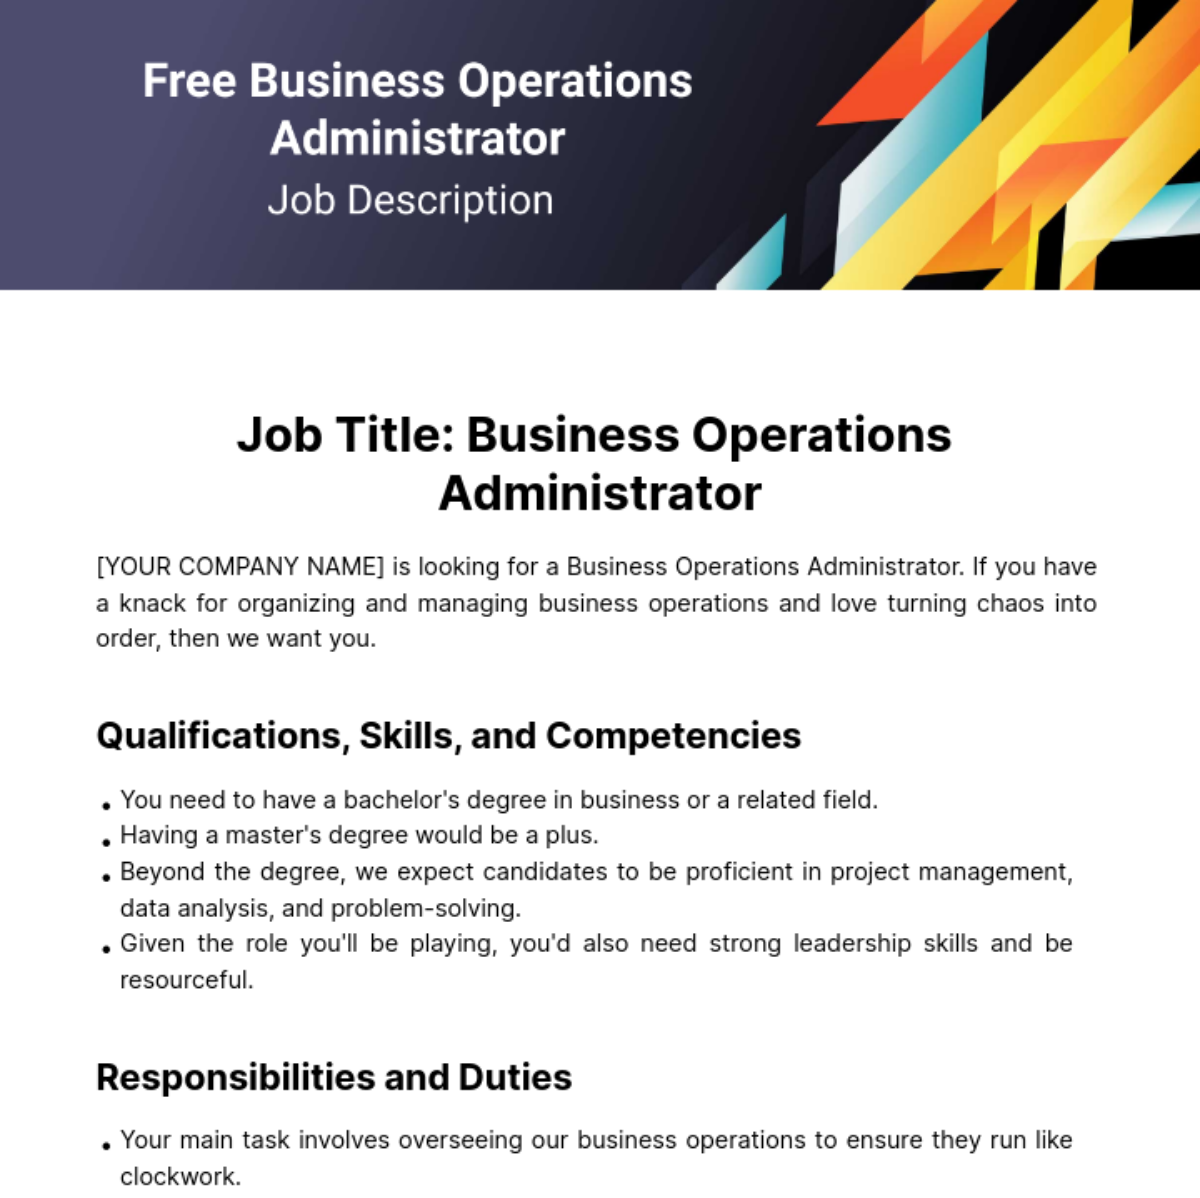 Free Business Operations Administrator Job Description Template